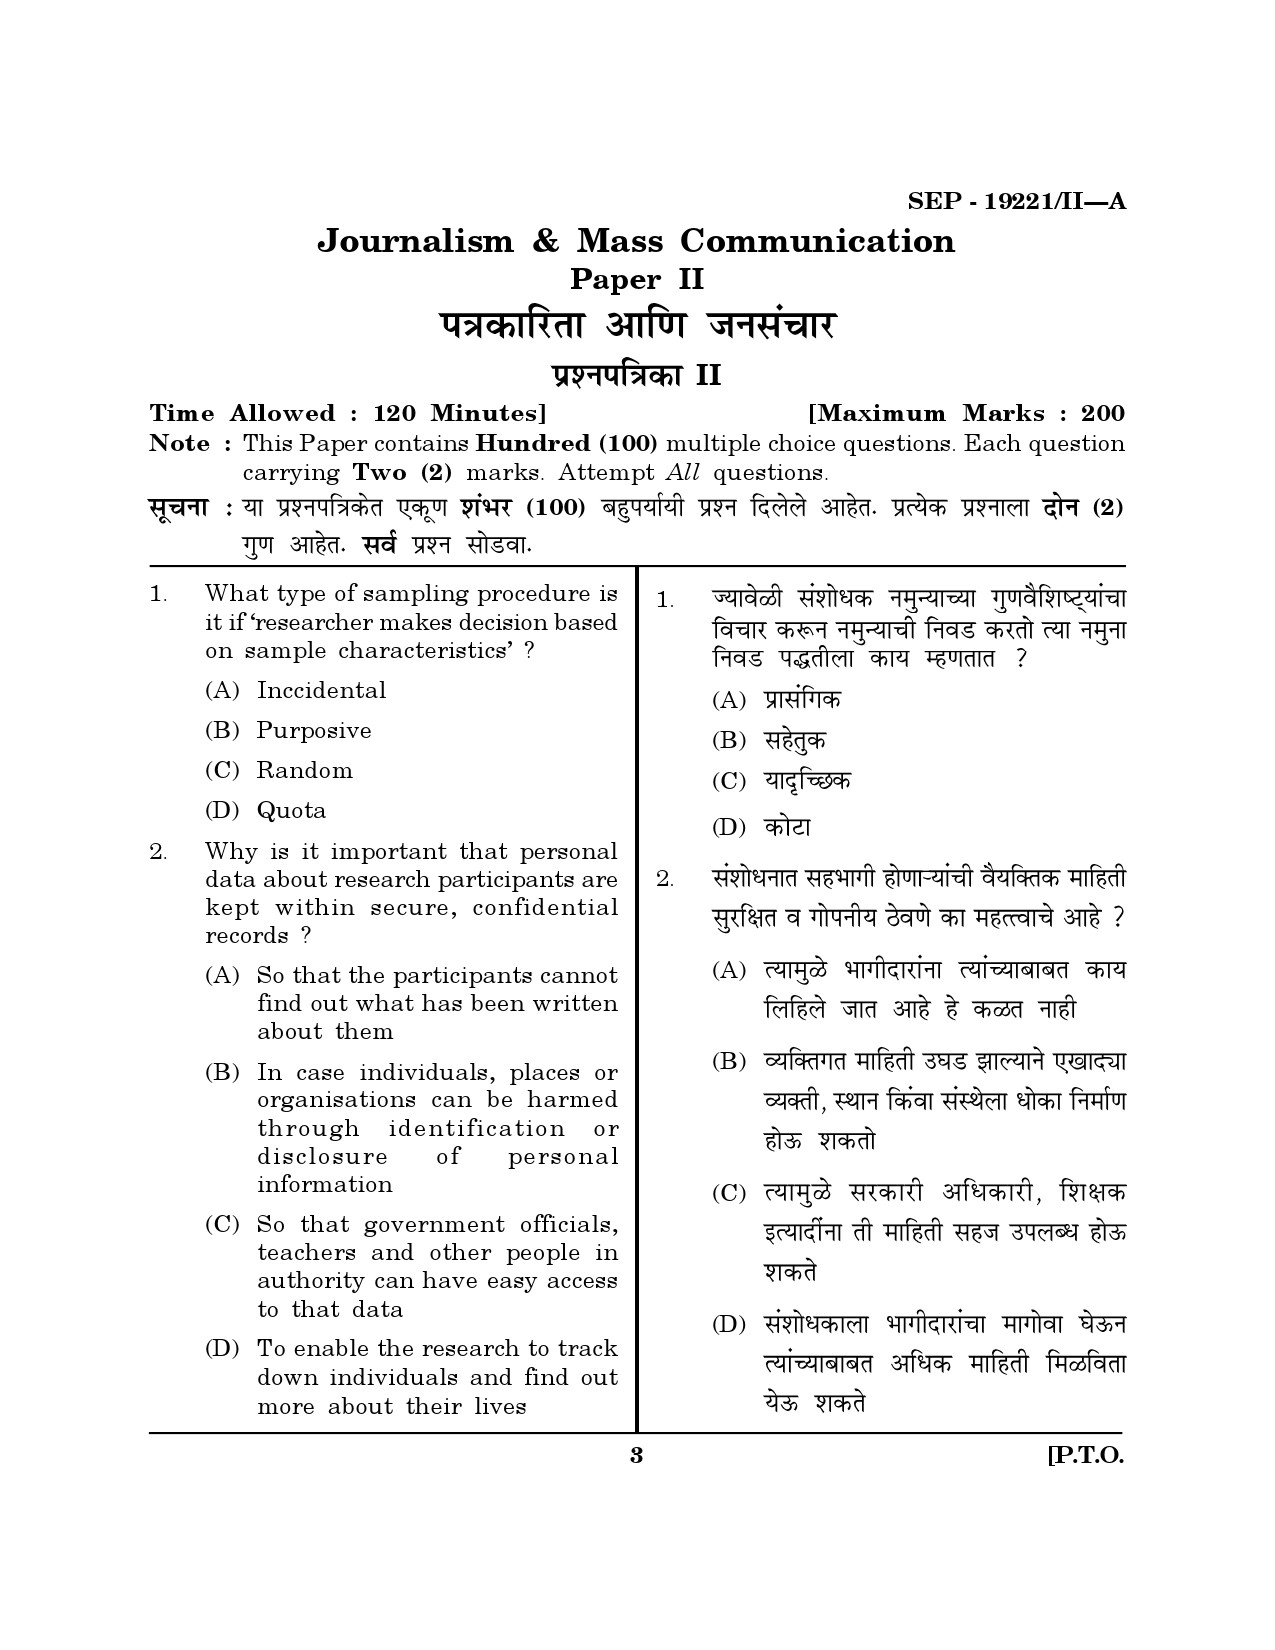 Maharashtra SET Journalism and Mass Communication Exam Question Paper September 2021 2